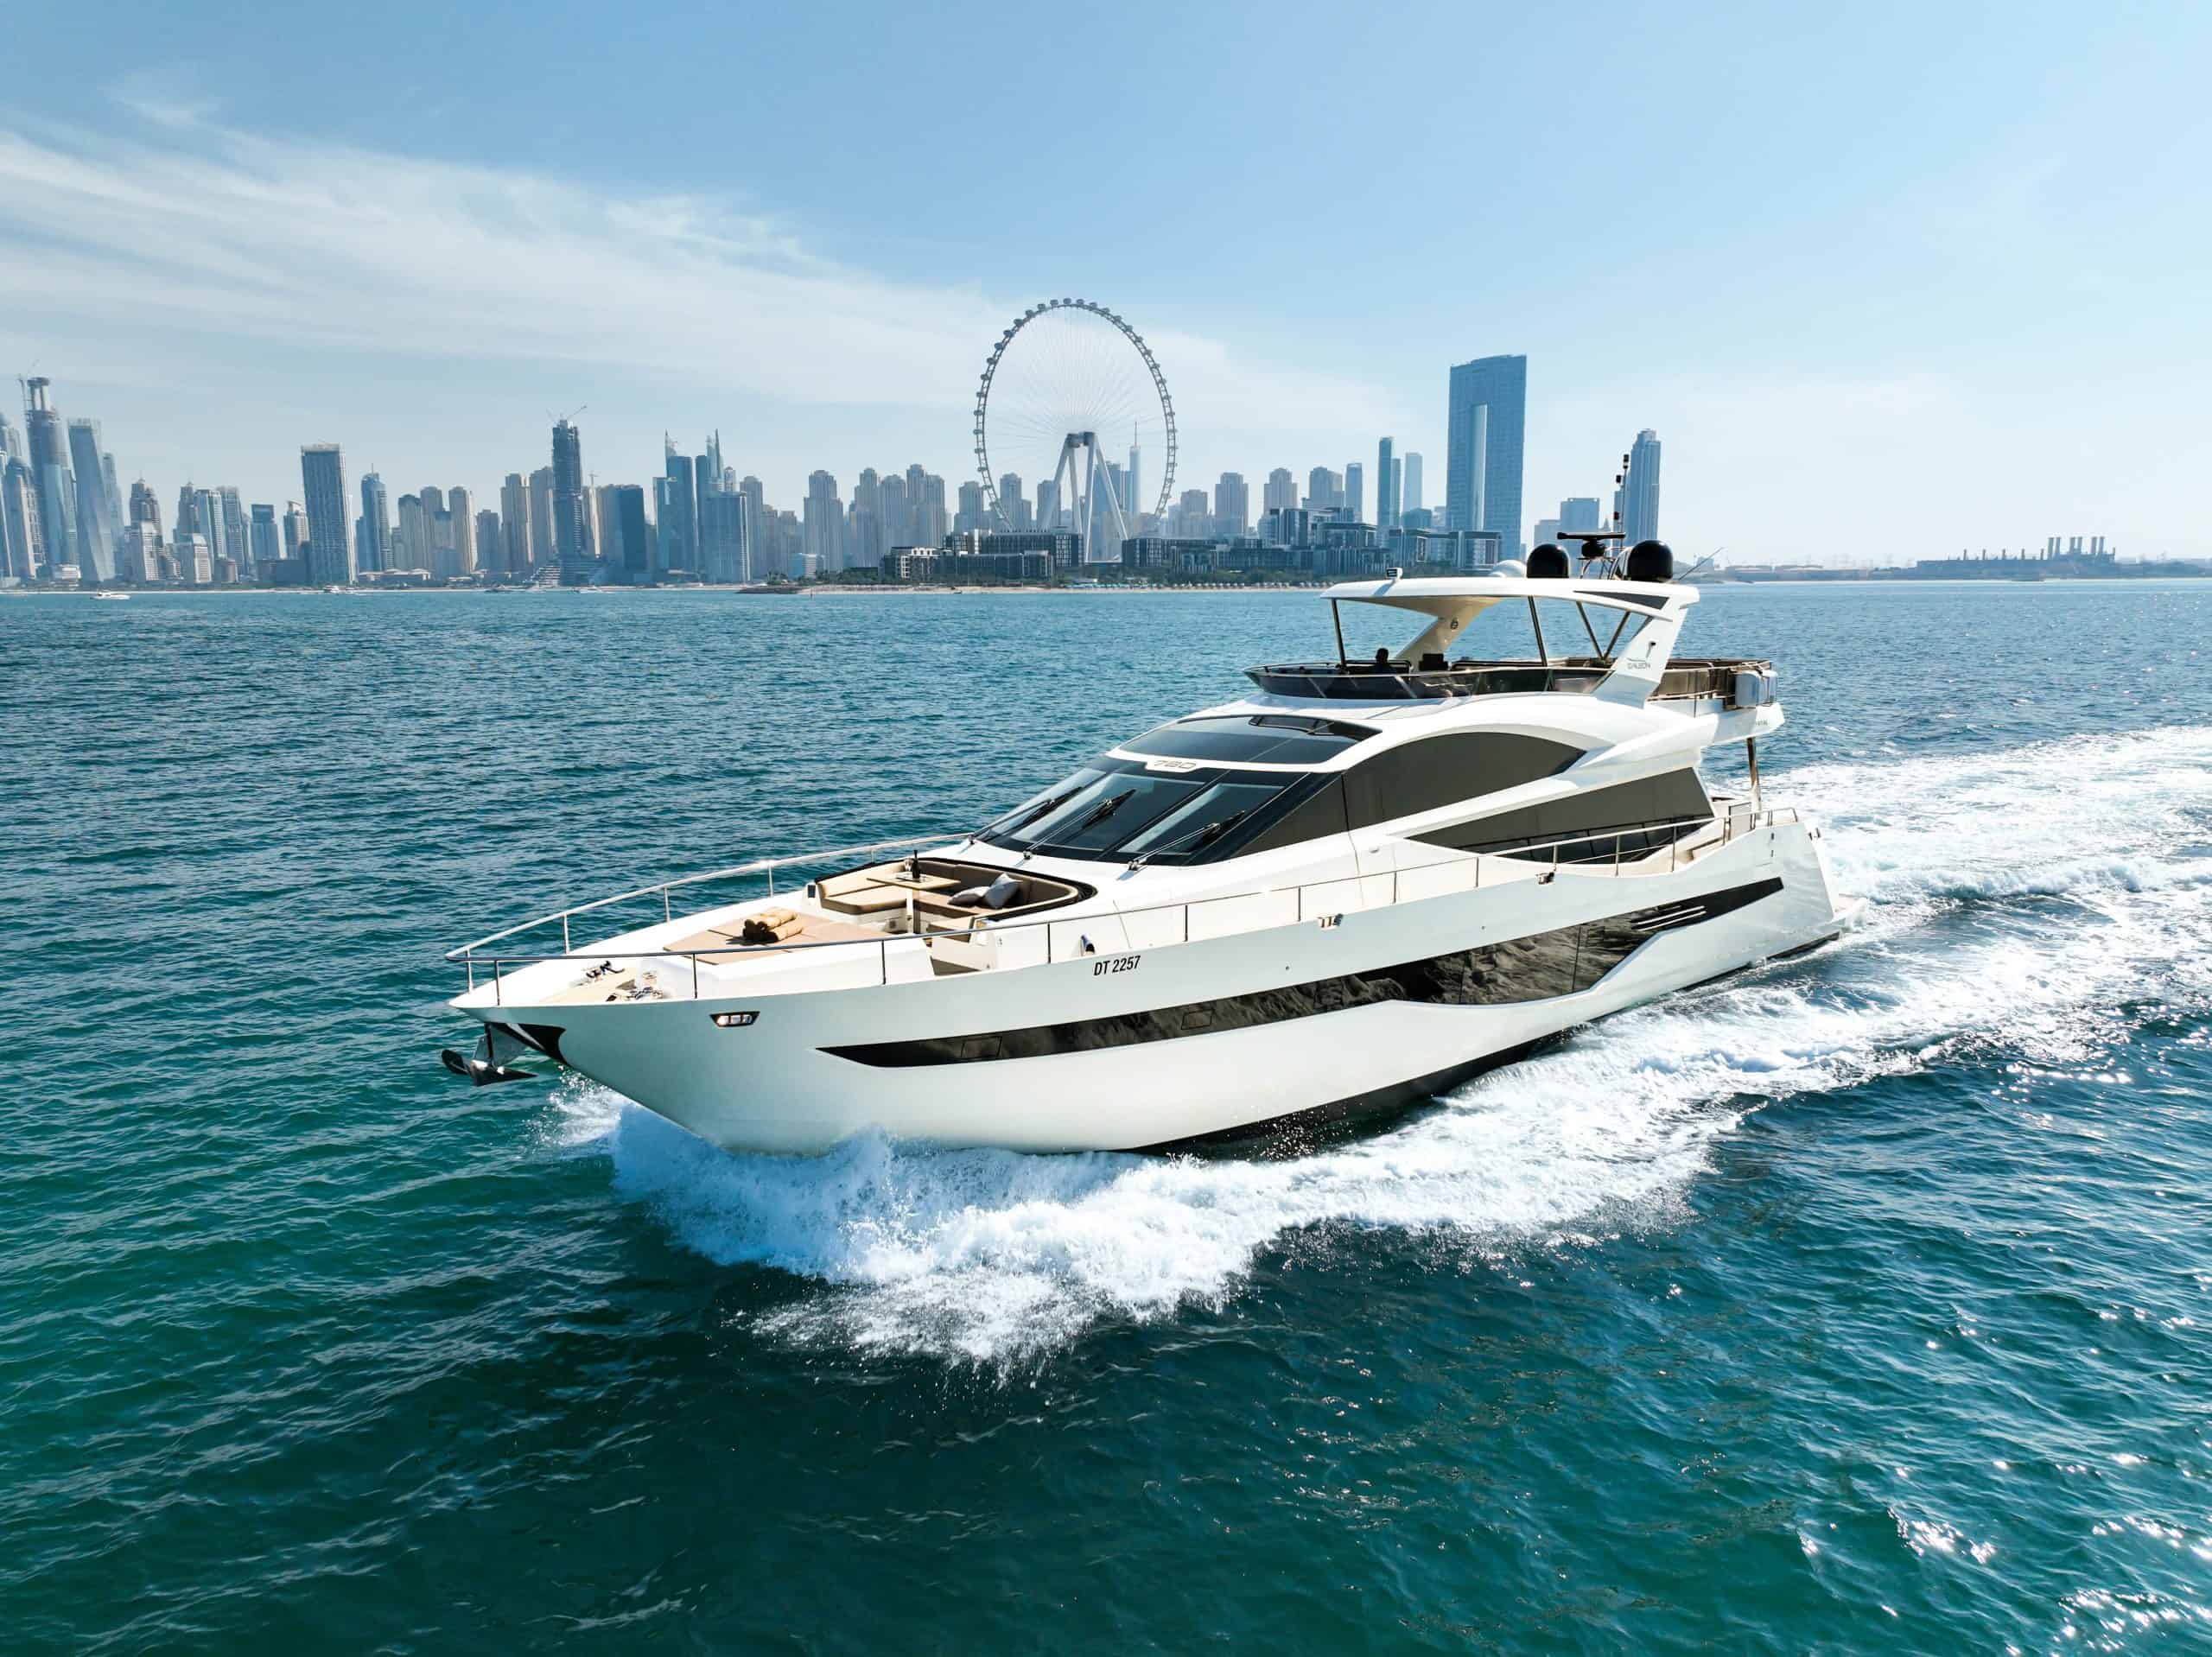 Luxury yacht cruising on calm waters